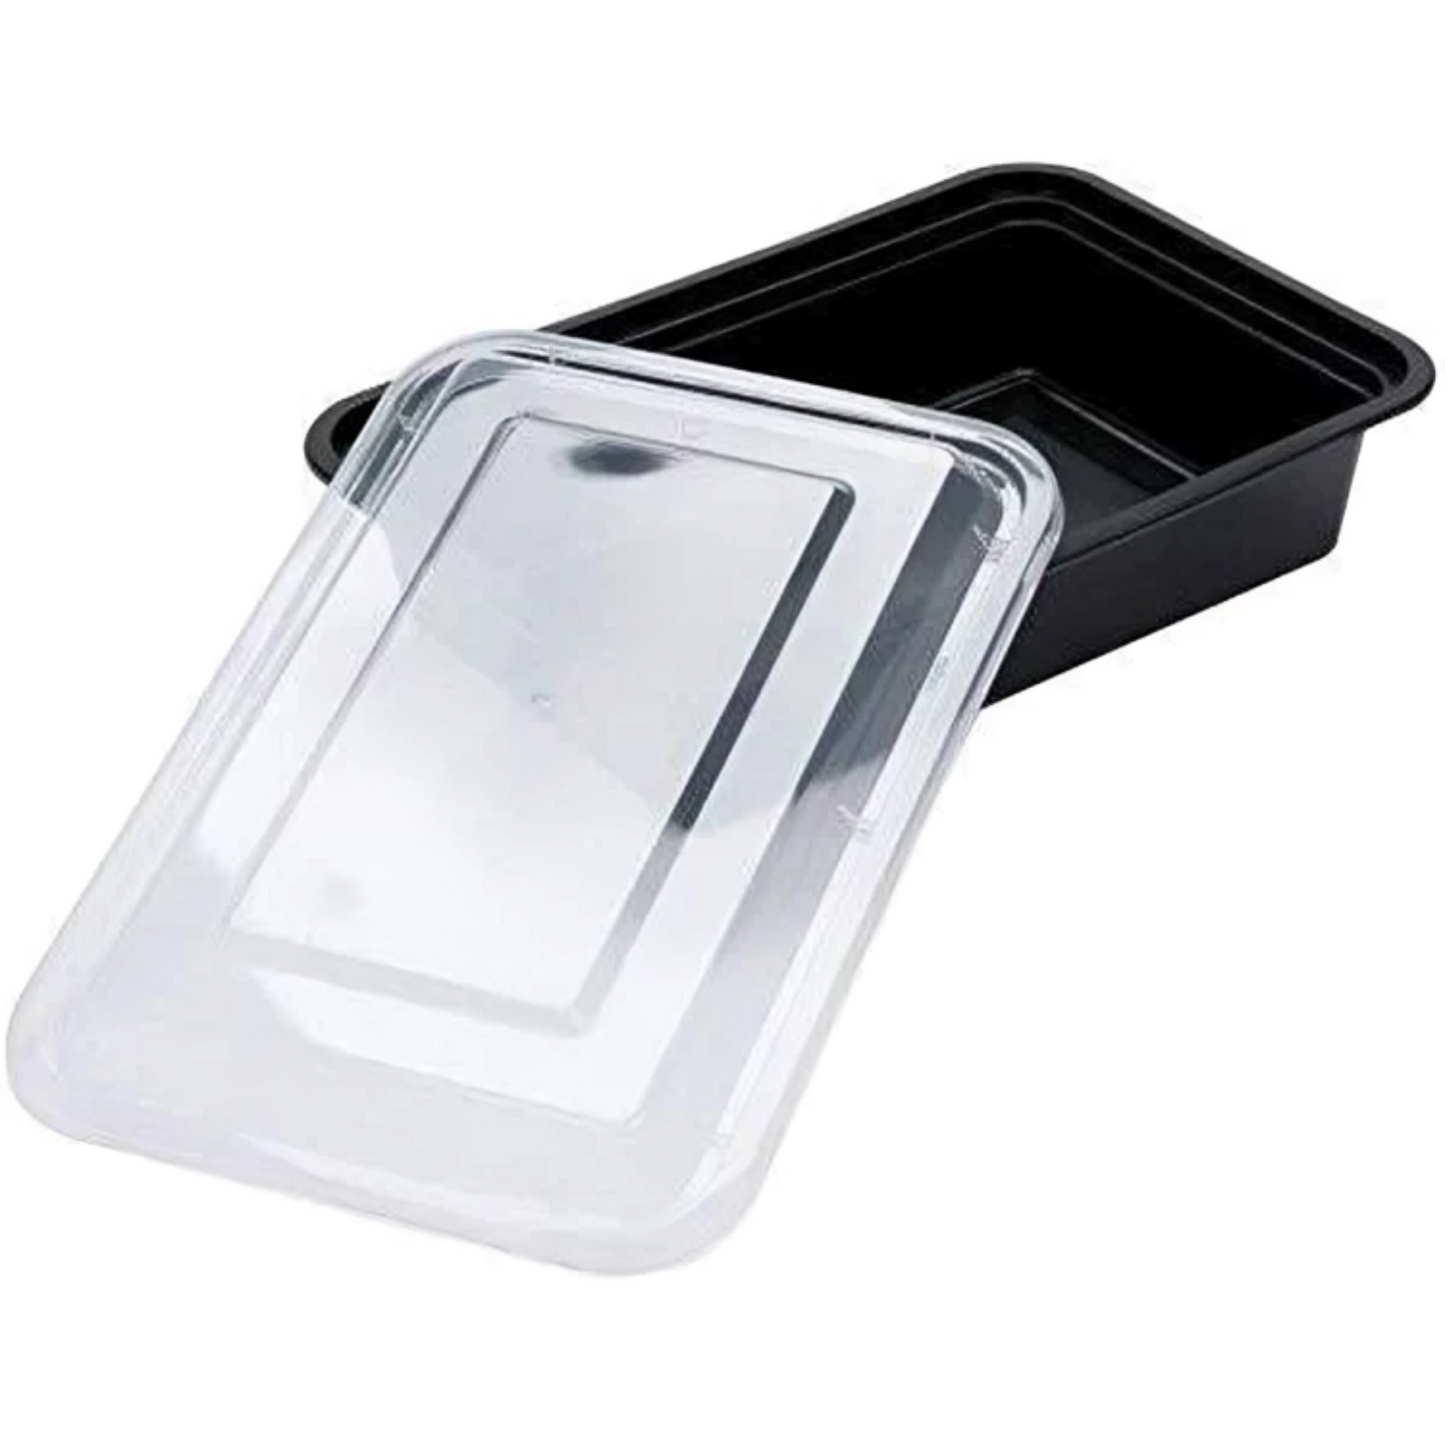 *BULK* 16oz. Black Rectangular Meal Prep / Bento Box Containers with Lids Food Storage & Serving VeZee   